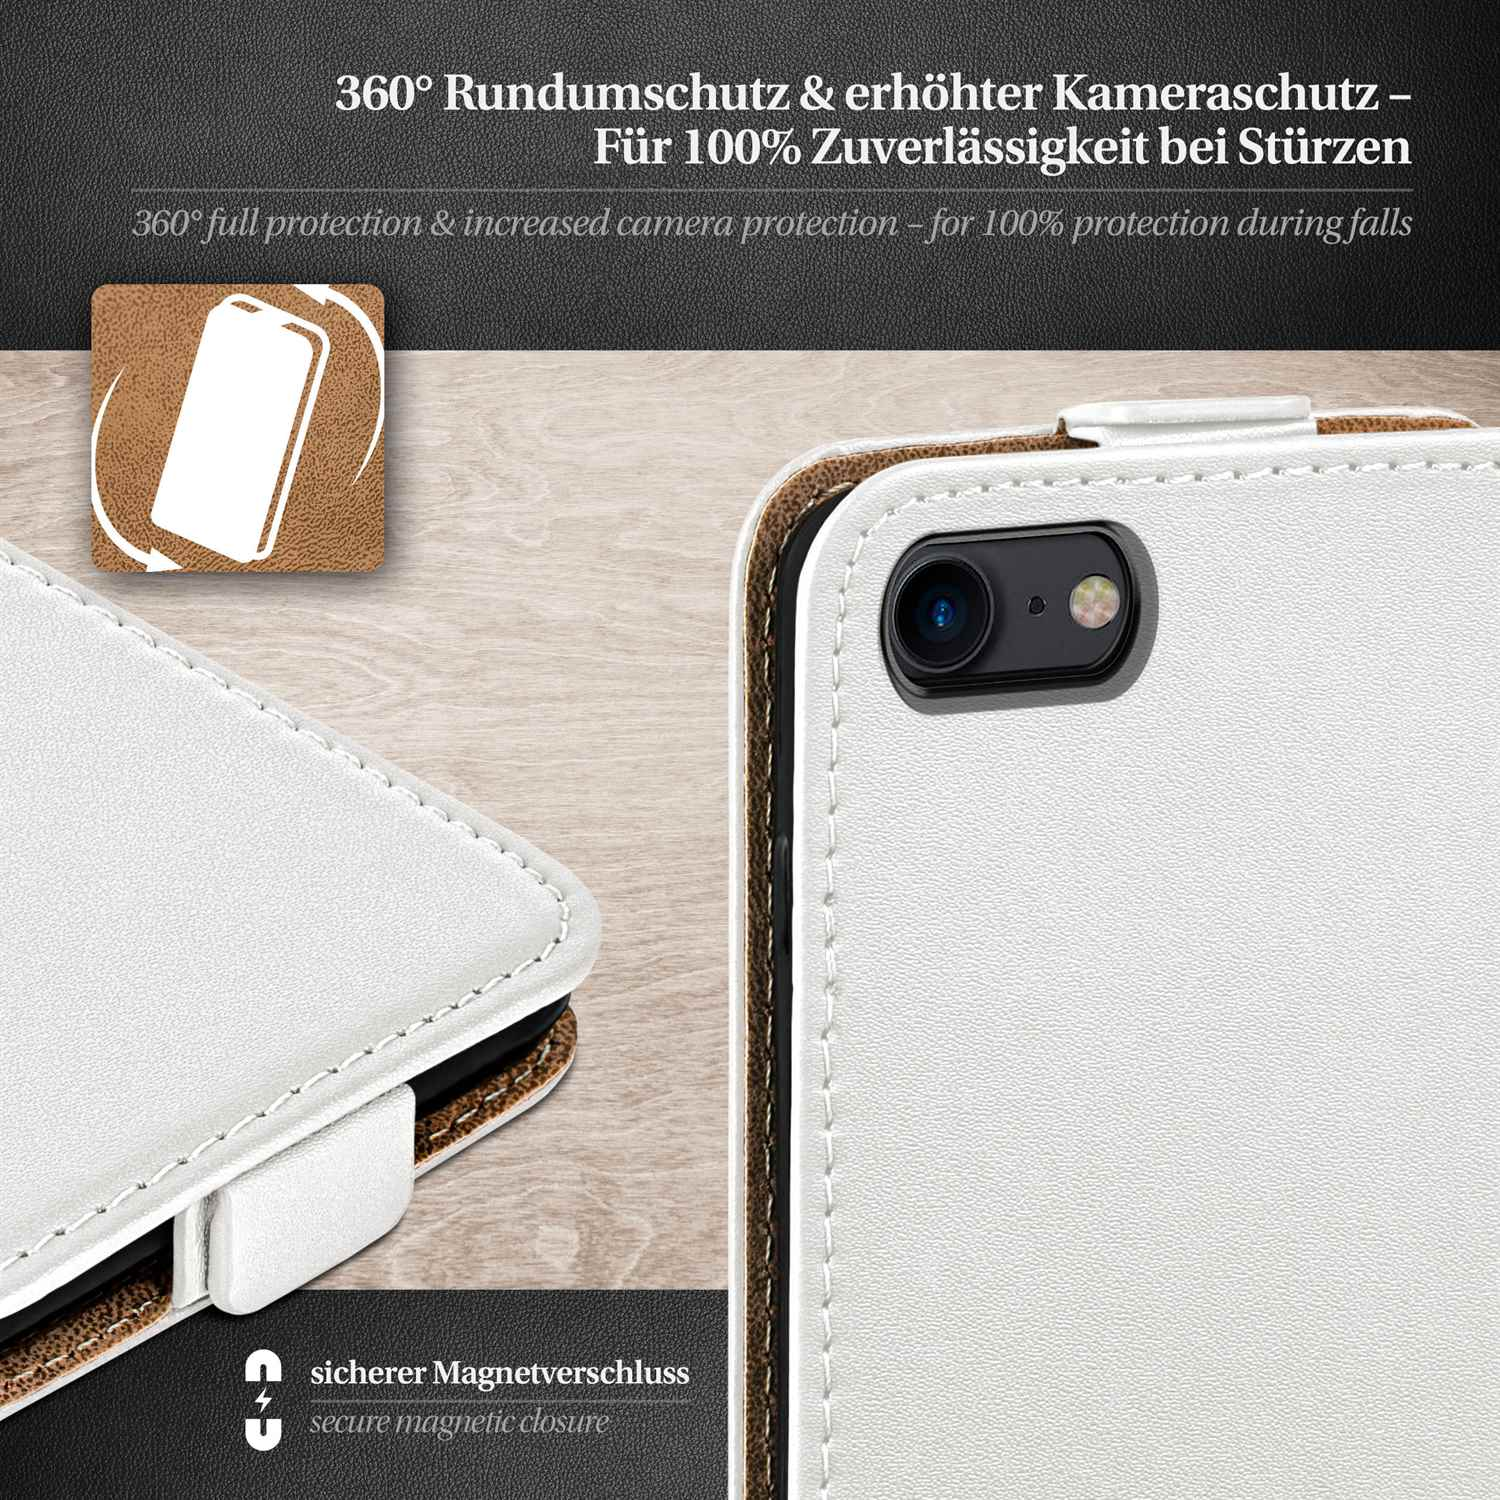 MOEX Flip Case, iPhone Apple, Cover, 8, Flip Pearl-White